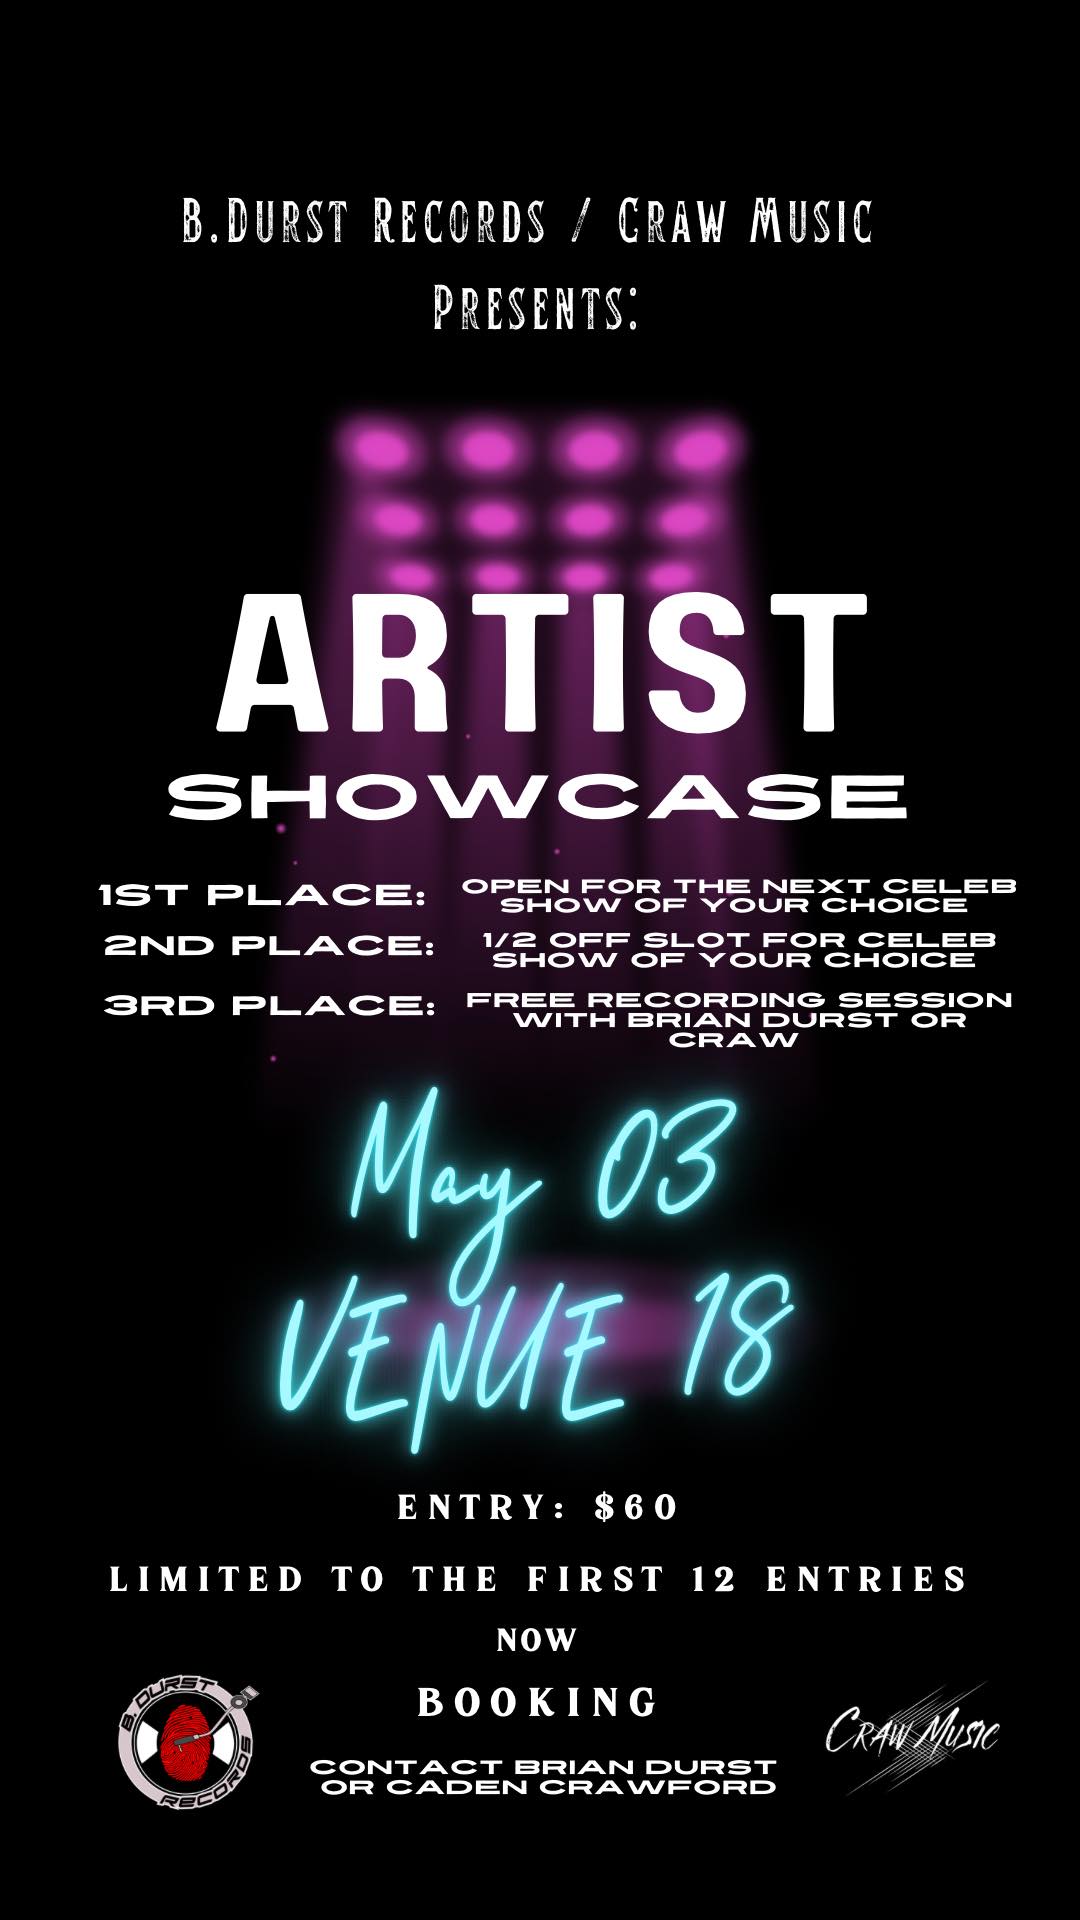 Artist Showcase at Venue 18